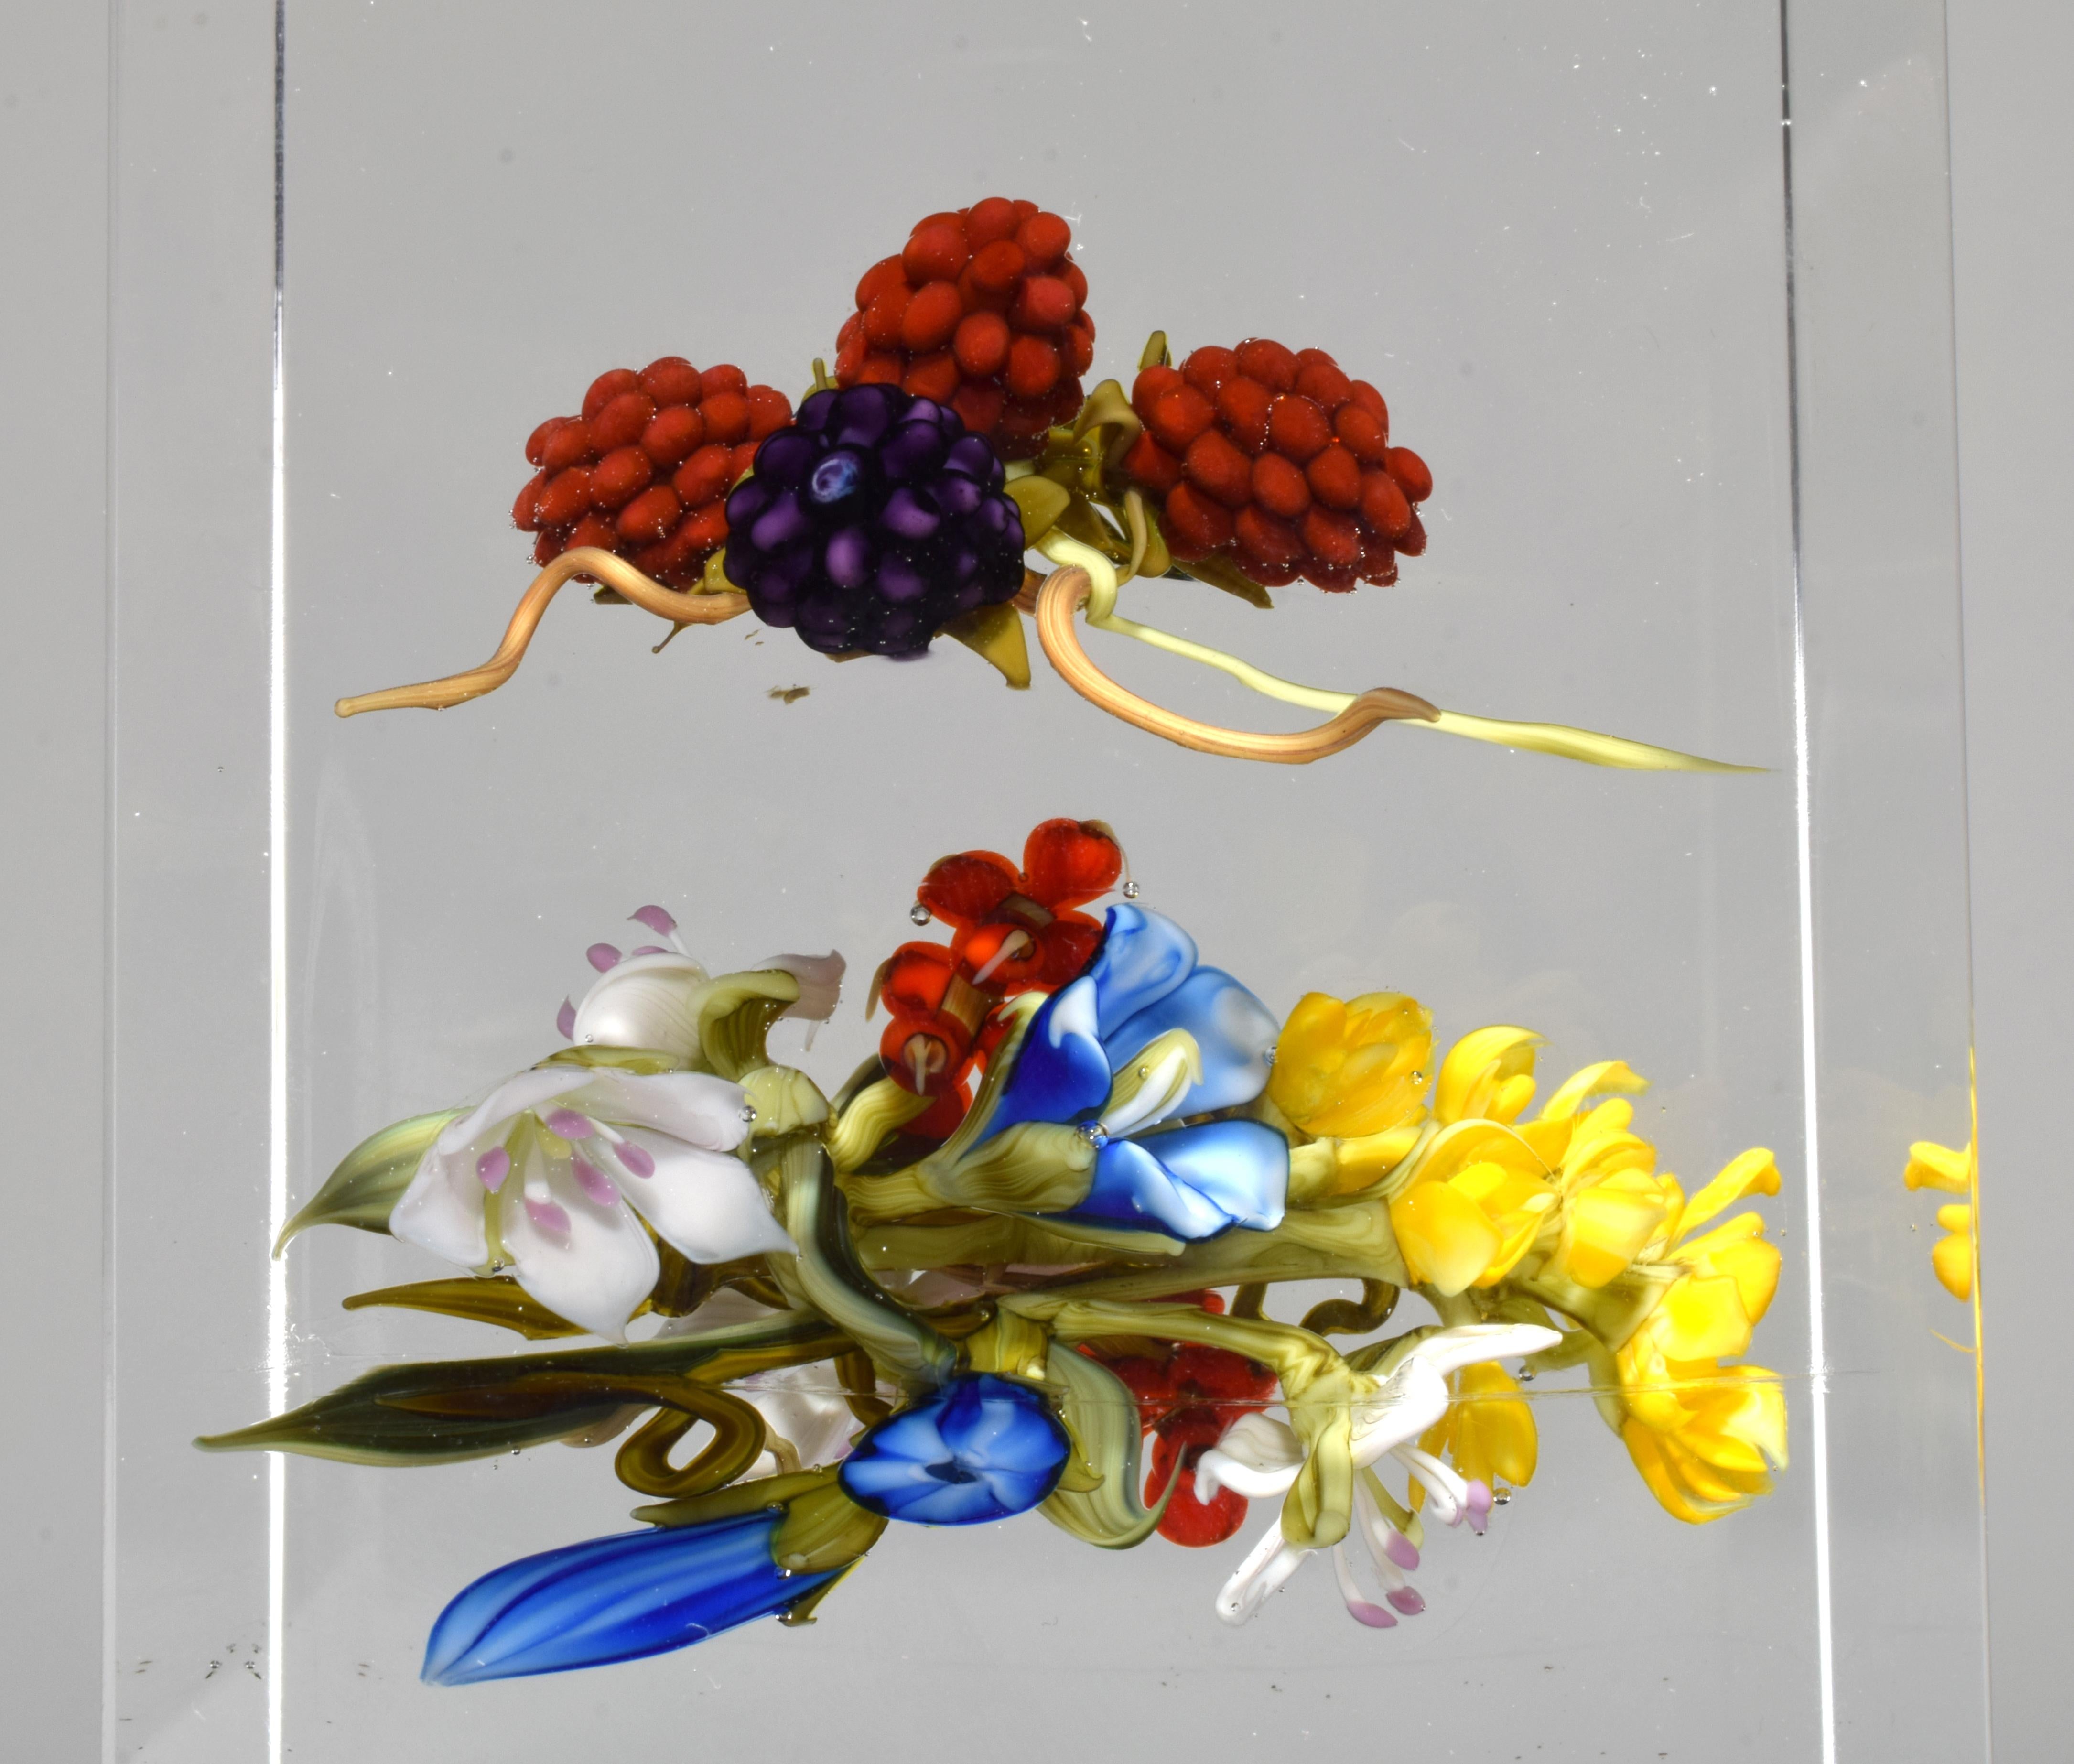 Glass Paul J. Stankard Upright Raspberries, Flowers & Root People Paperweight For Sale